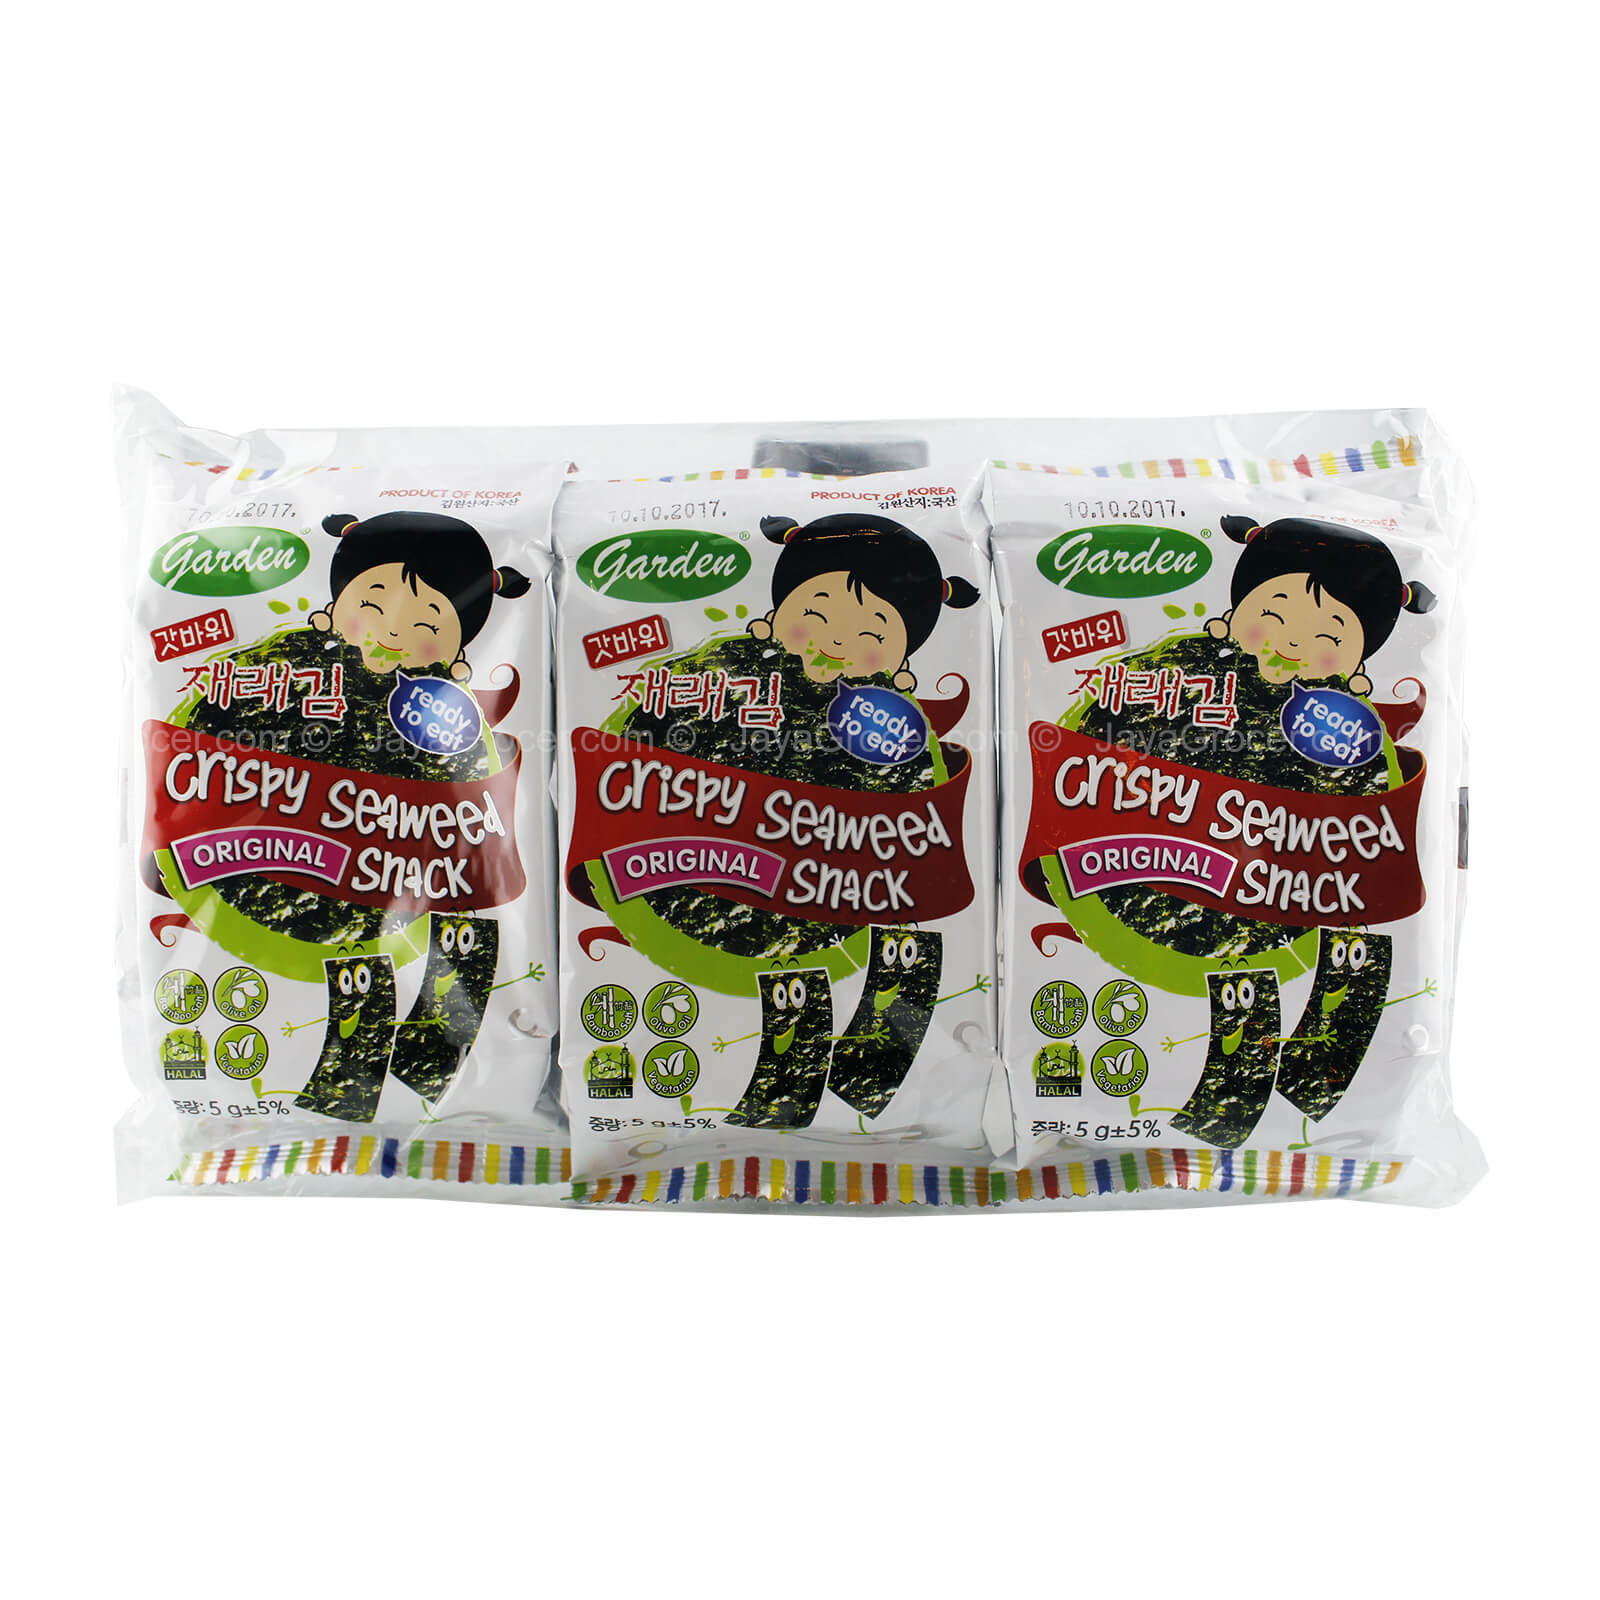 Korea Garden Original Crispy Seaweed Snack 3 Packs HALAL